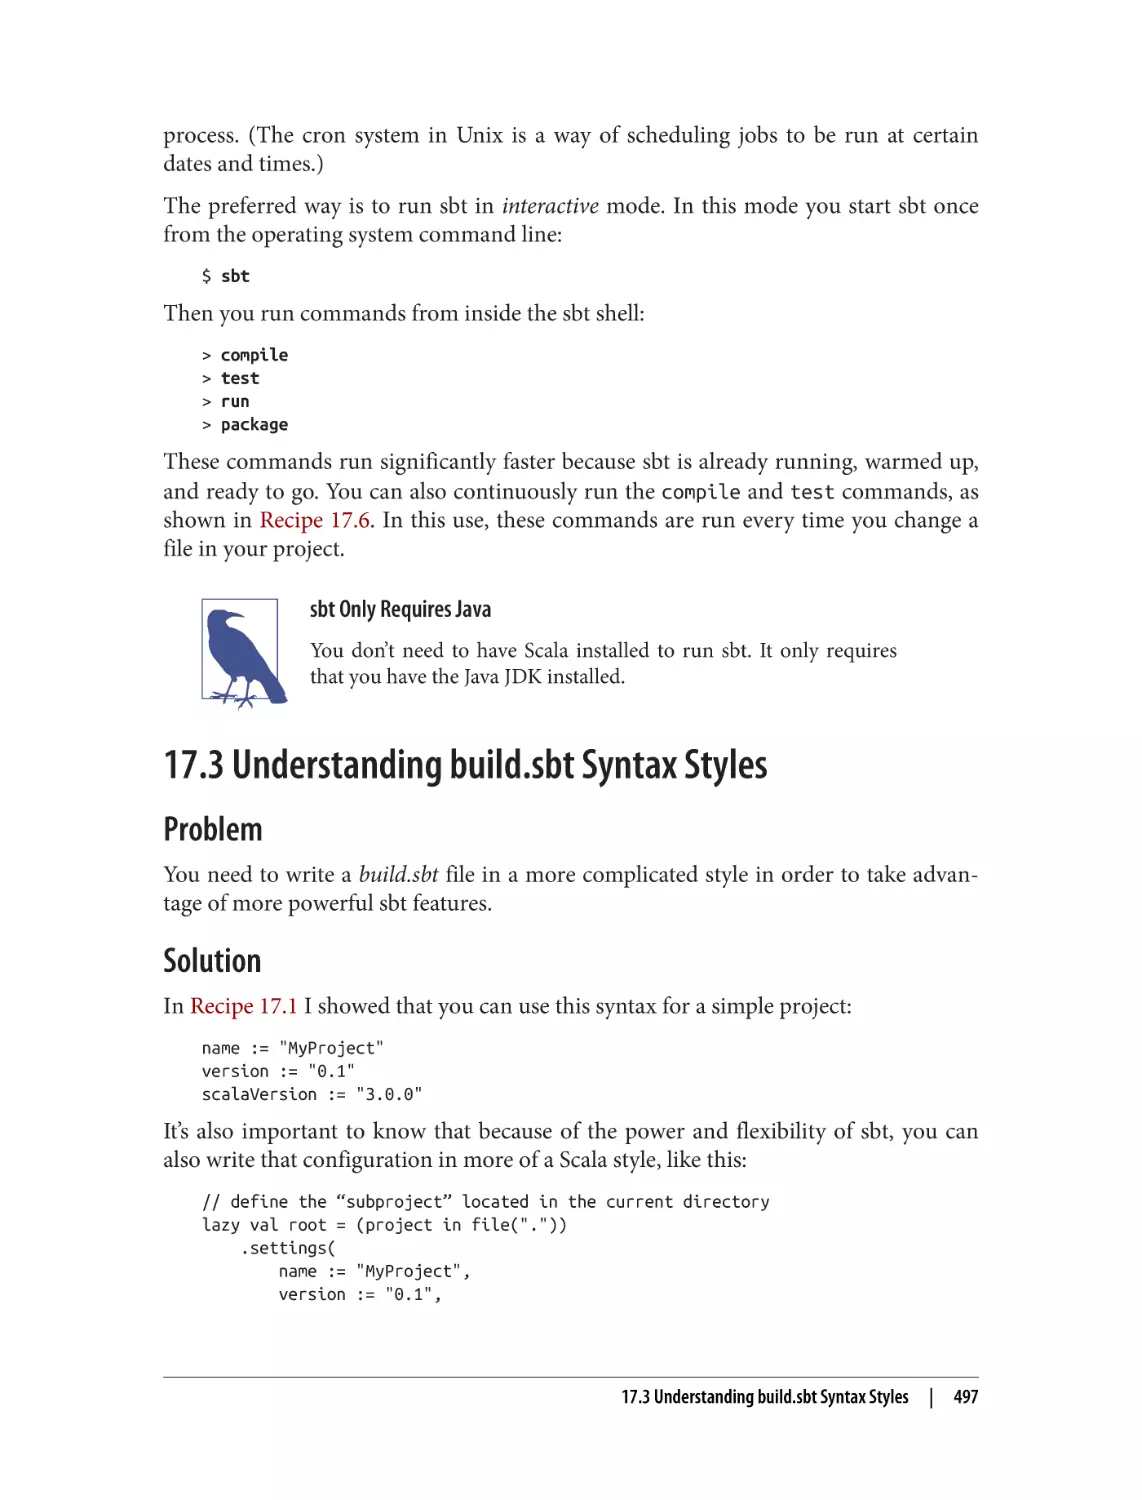 17.3 Understanding build.sbt Syntax Styles
Problem
Solution